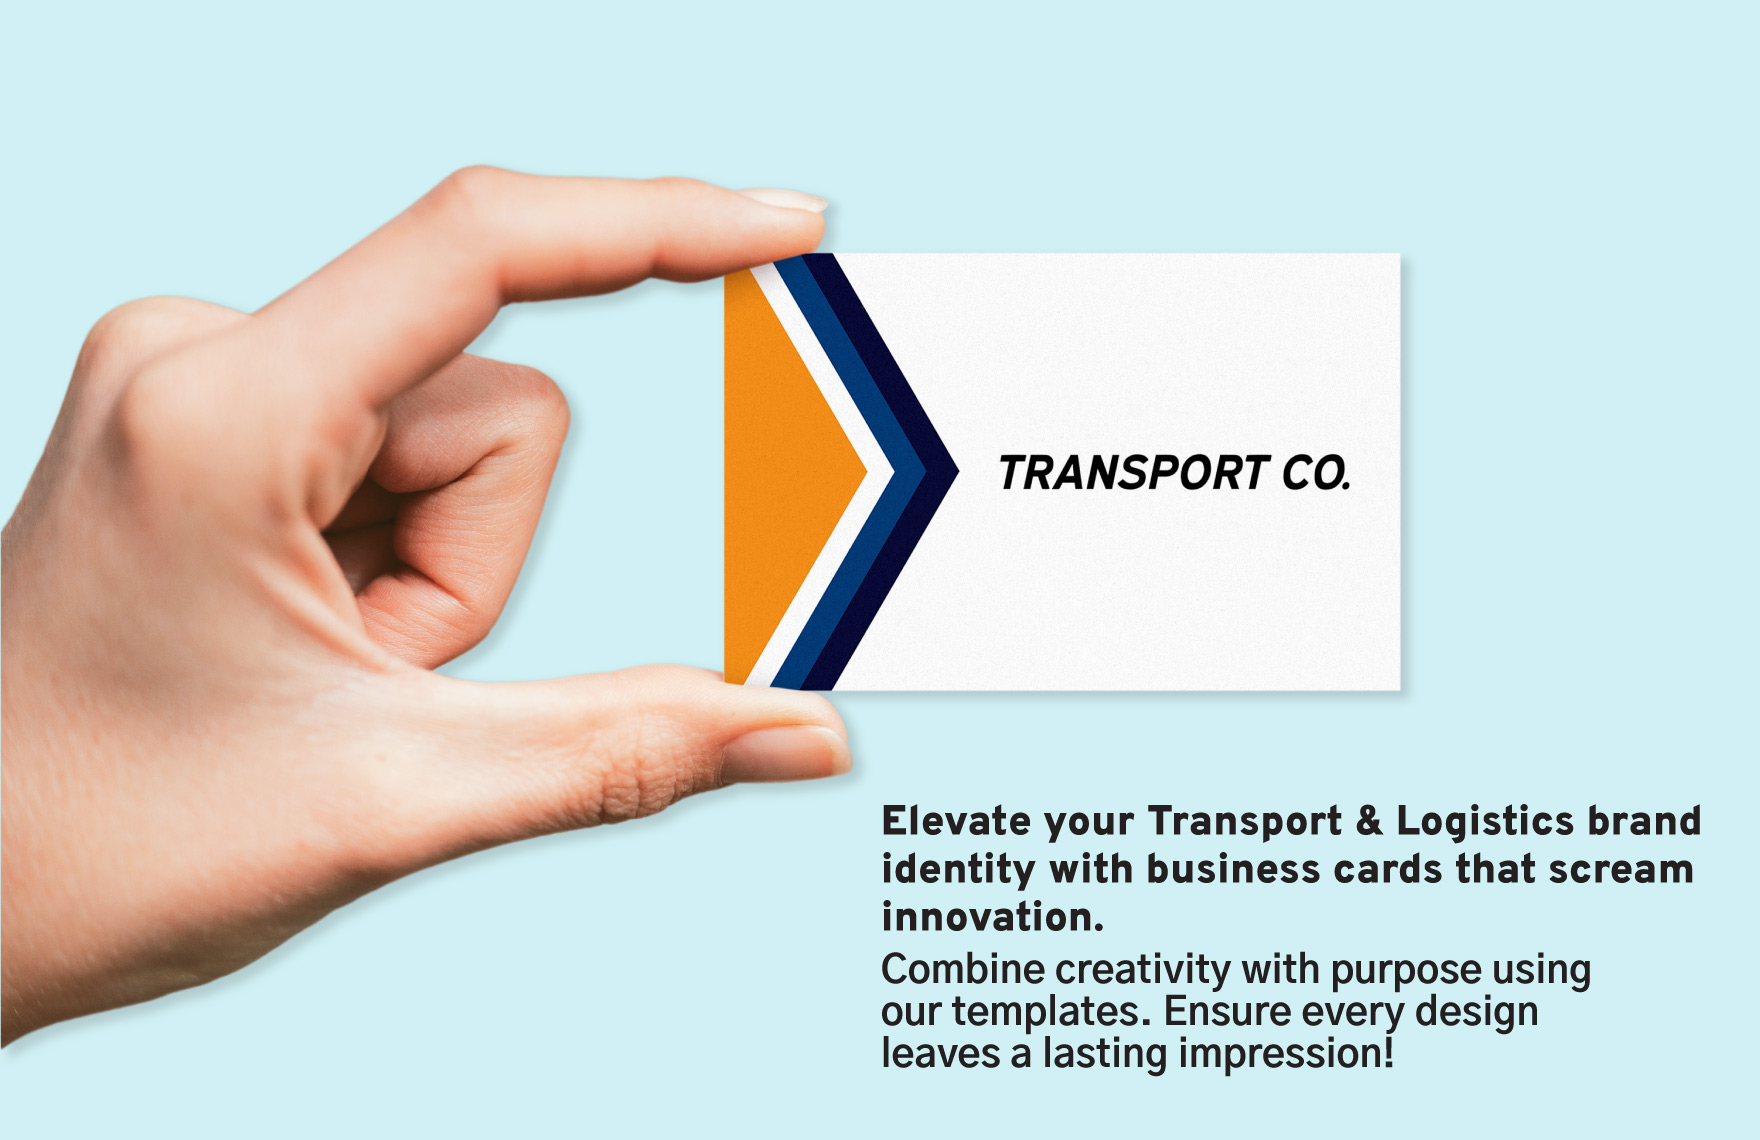 Transport and Logistics Freight Broker Business Card Design Template